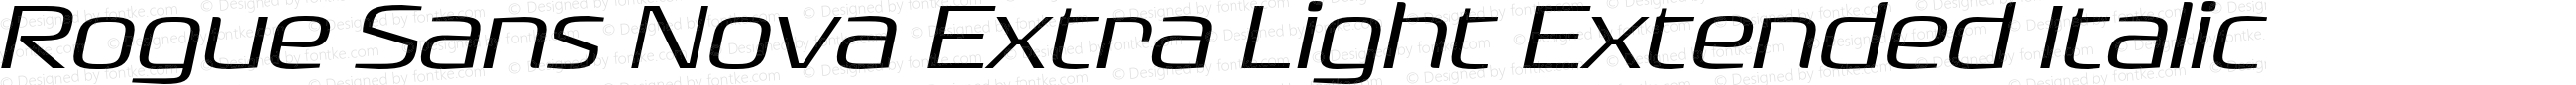 Rogue Sans Nova Extra Light Extended Italic